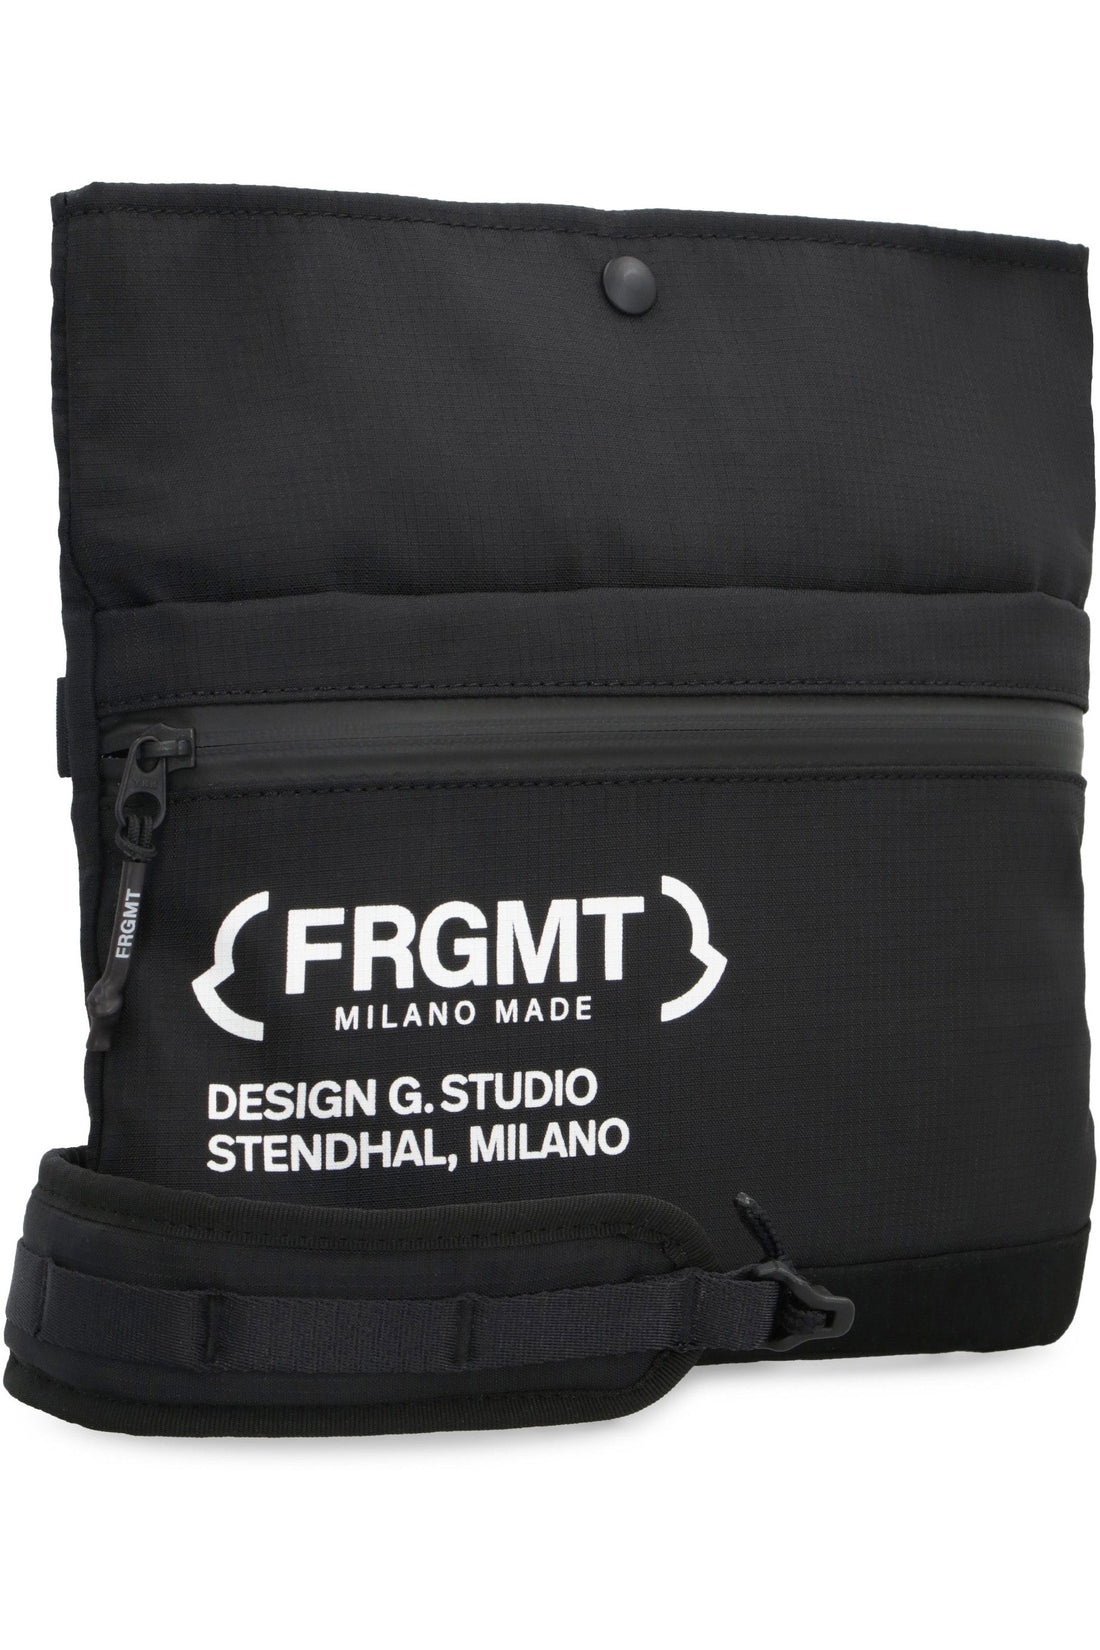 Moncler Genius-OUTLET-SALE-7 Moncler FRGMT Hiroshi Fujiwara - Sacoche nylon messenger bag-ARCHIVIST